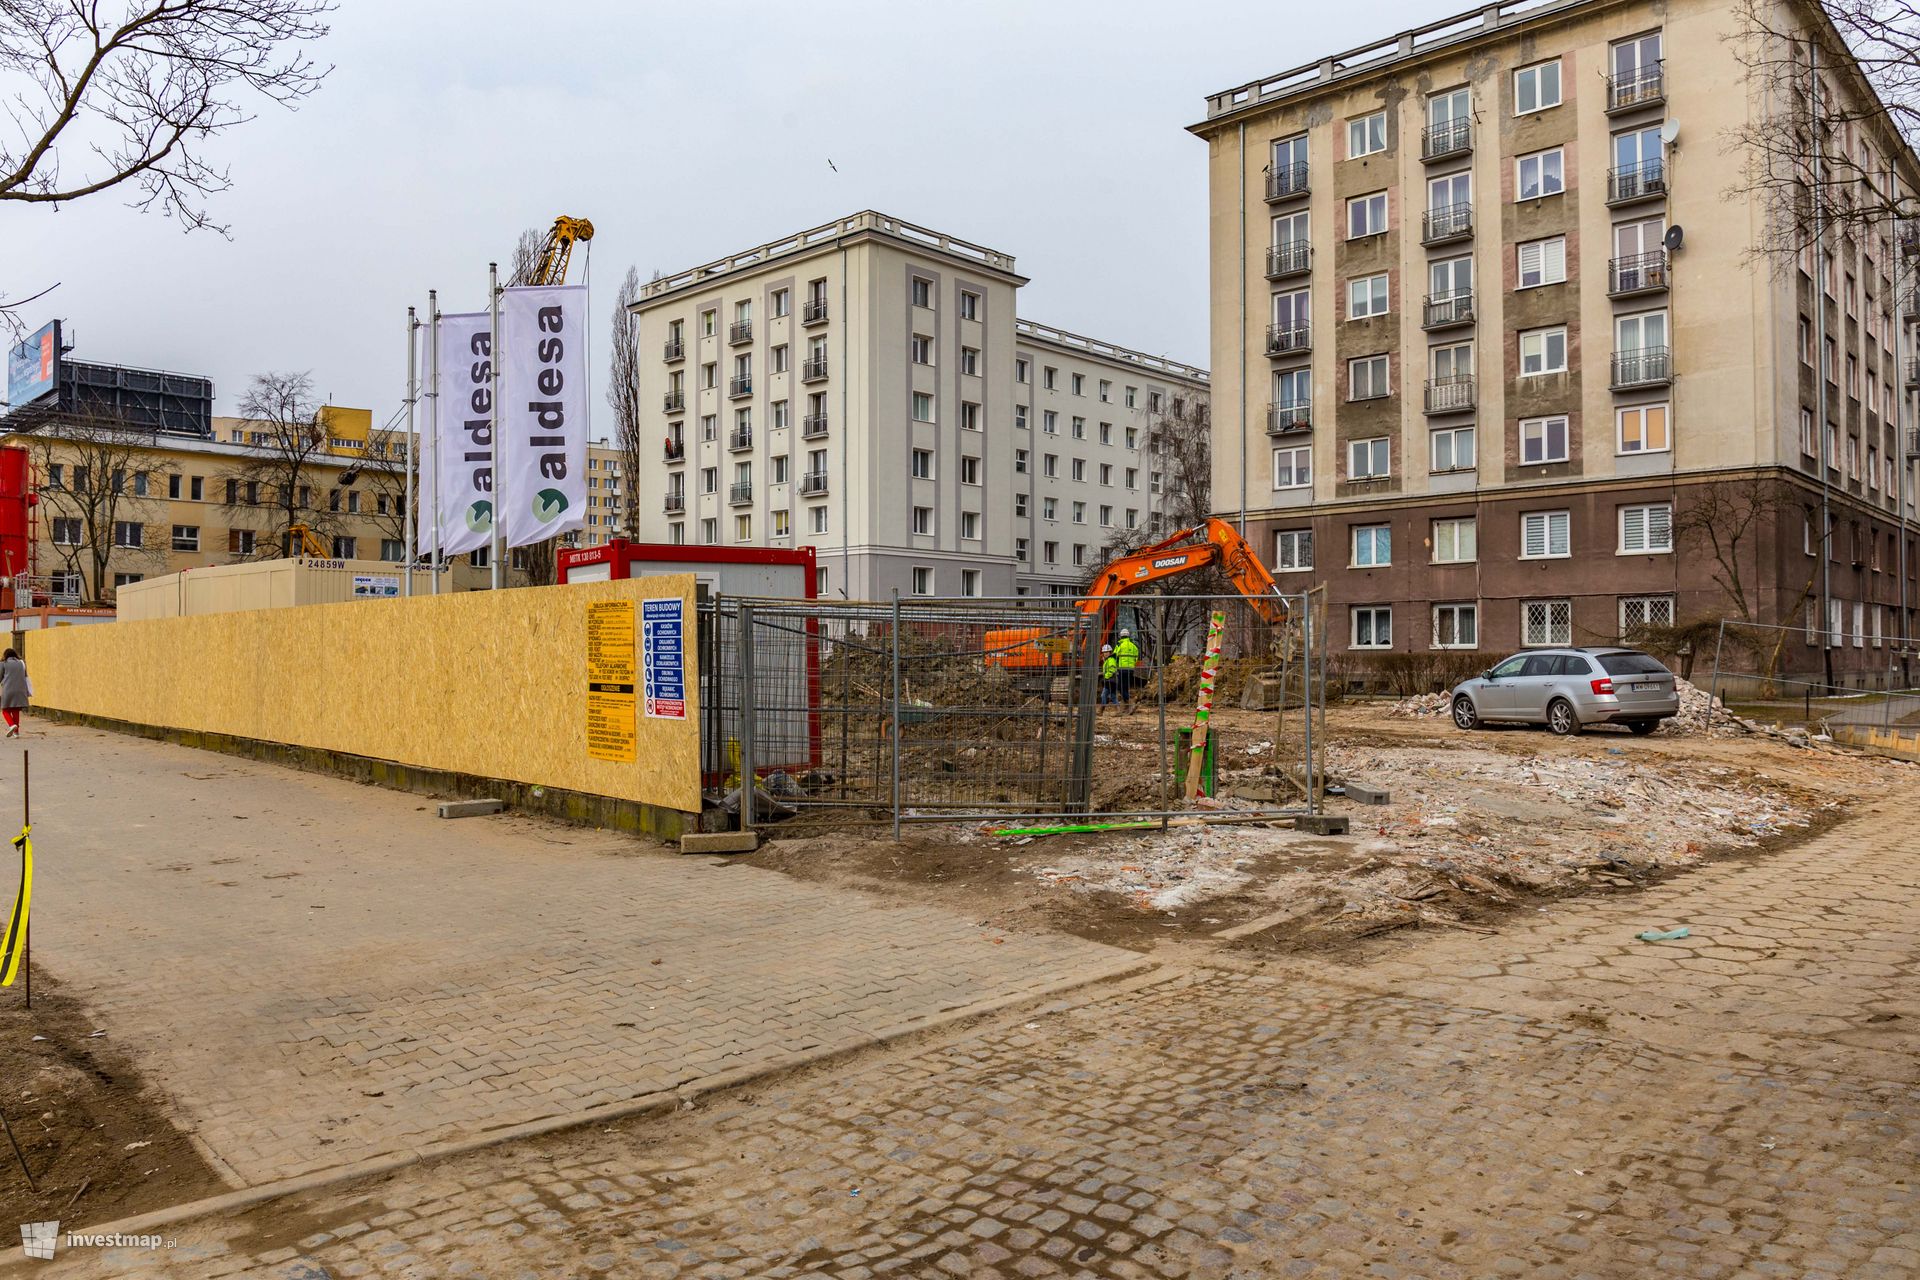 [Warszawa] Woronicza Apartments